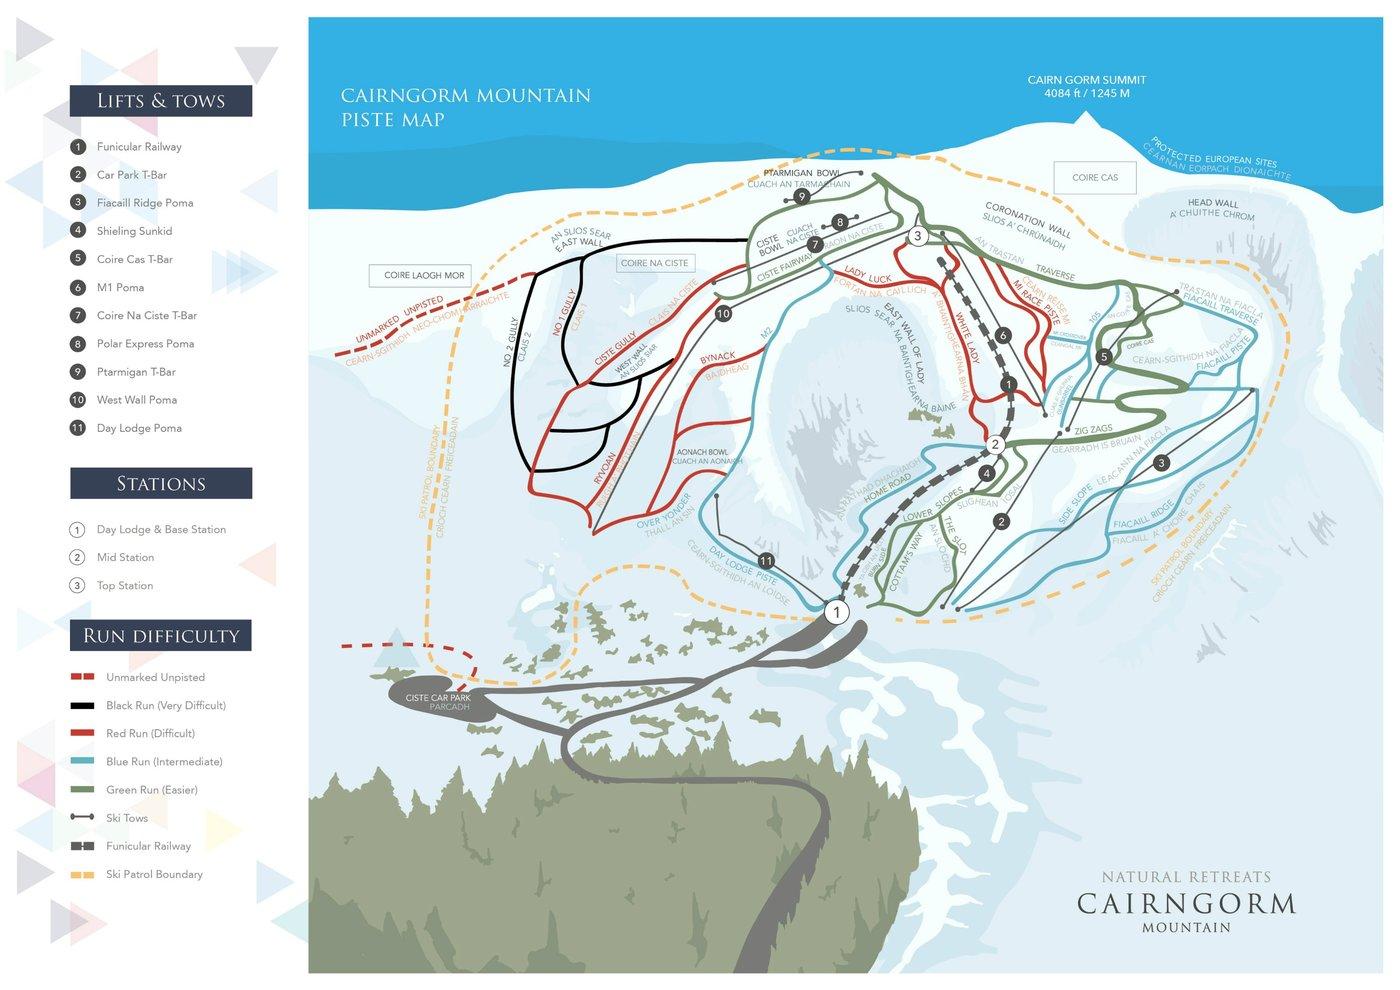 CairnGorm Mountain Trail Map